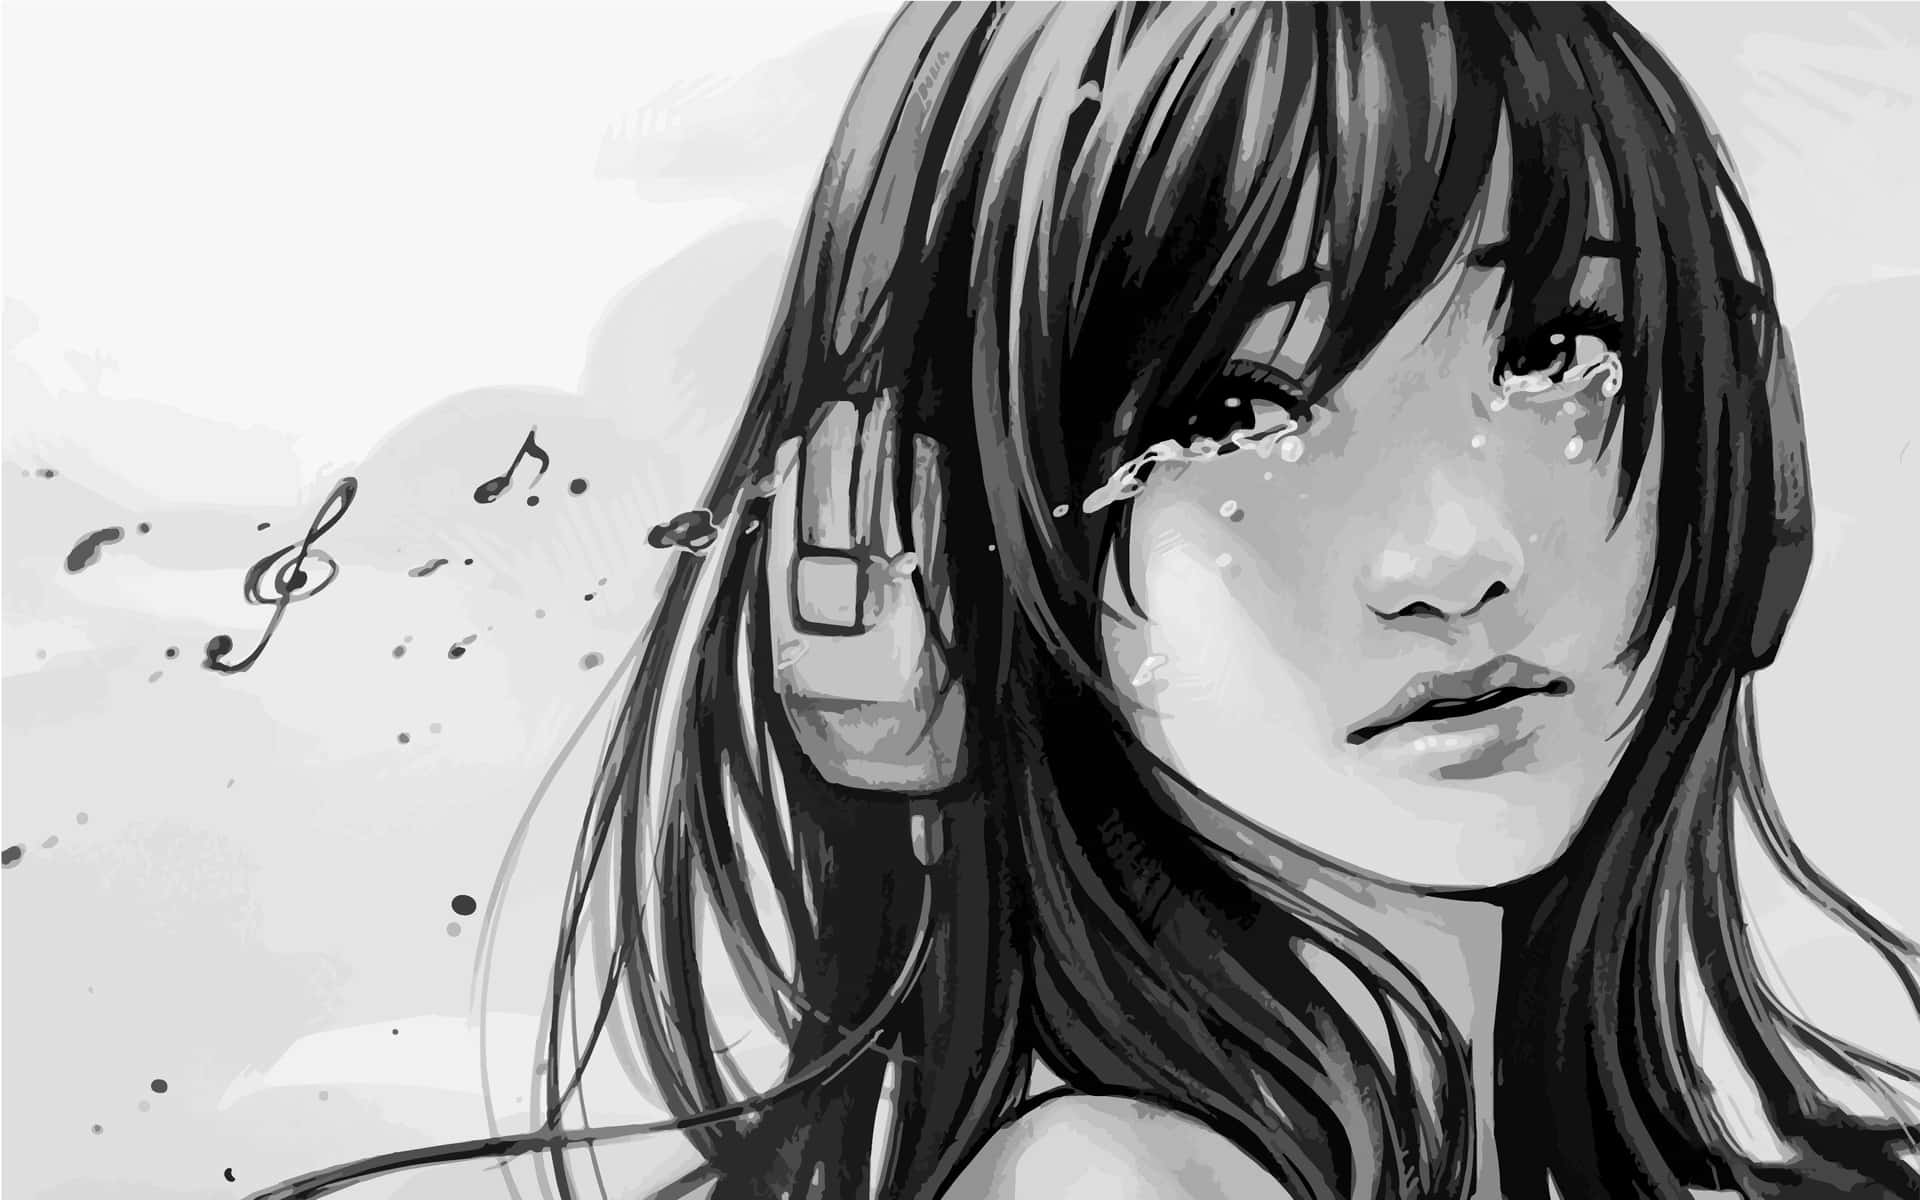 Sad Aesthetic Anime Girl Wearing Headphones Wallpaper